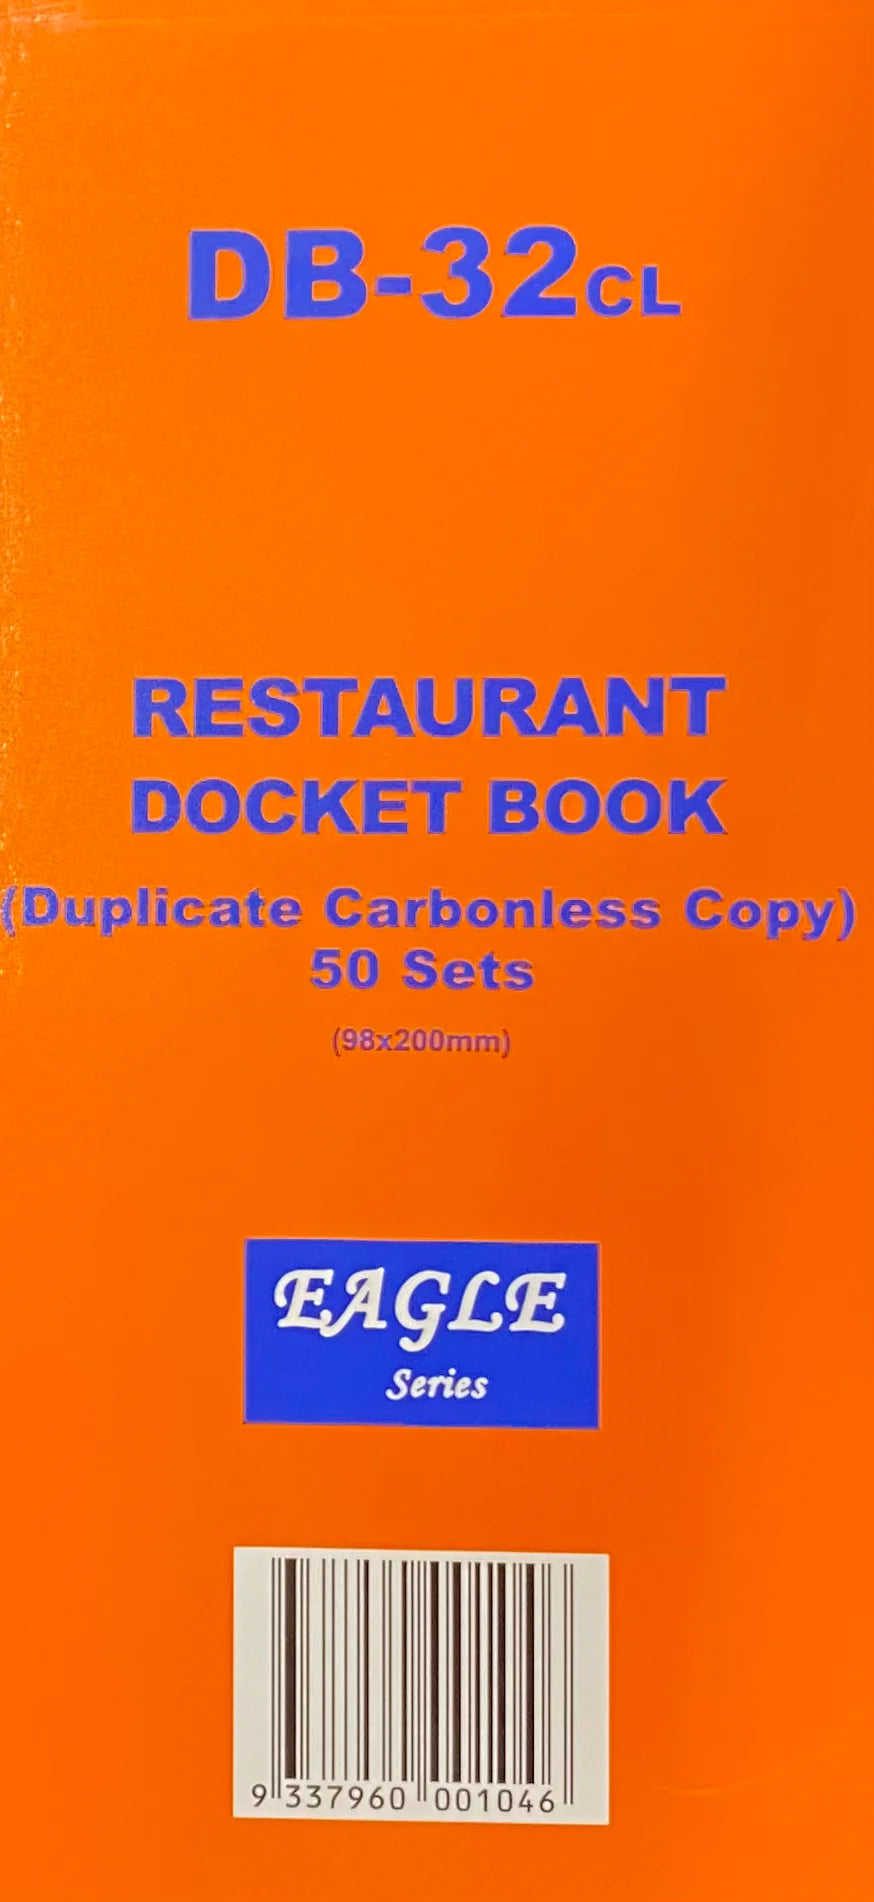 carbonless triplicate restaurant docket book 98x200mm